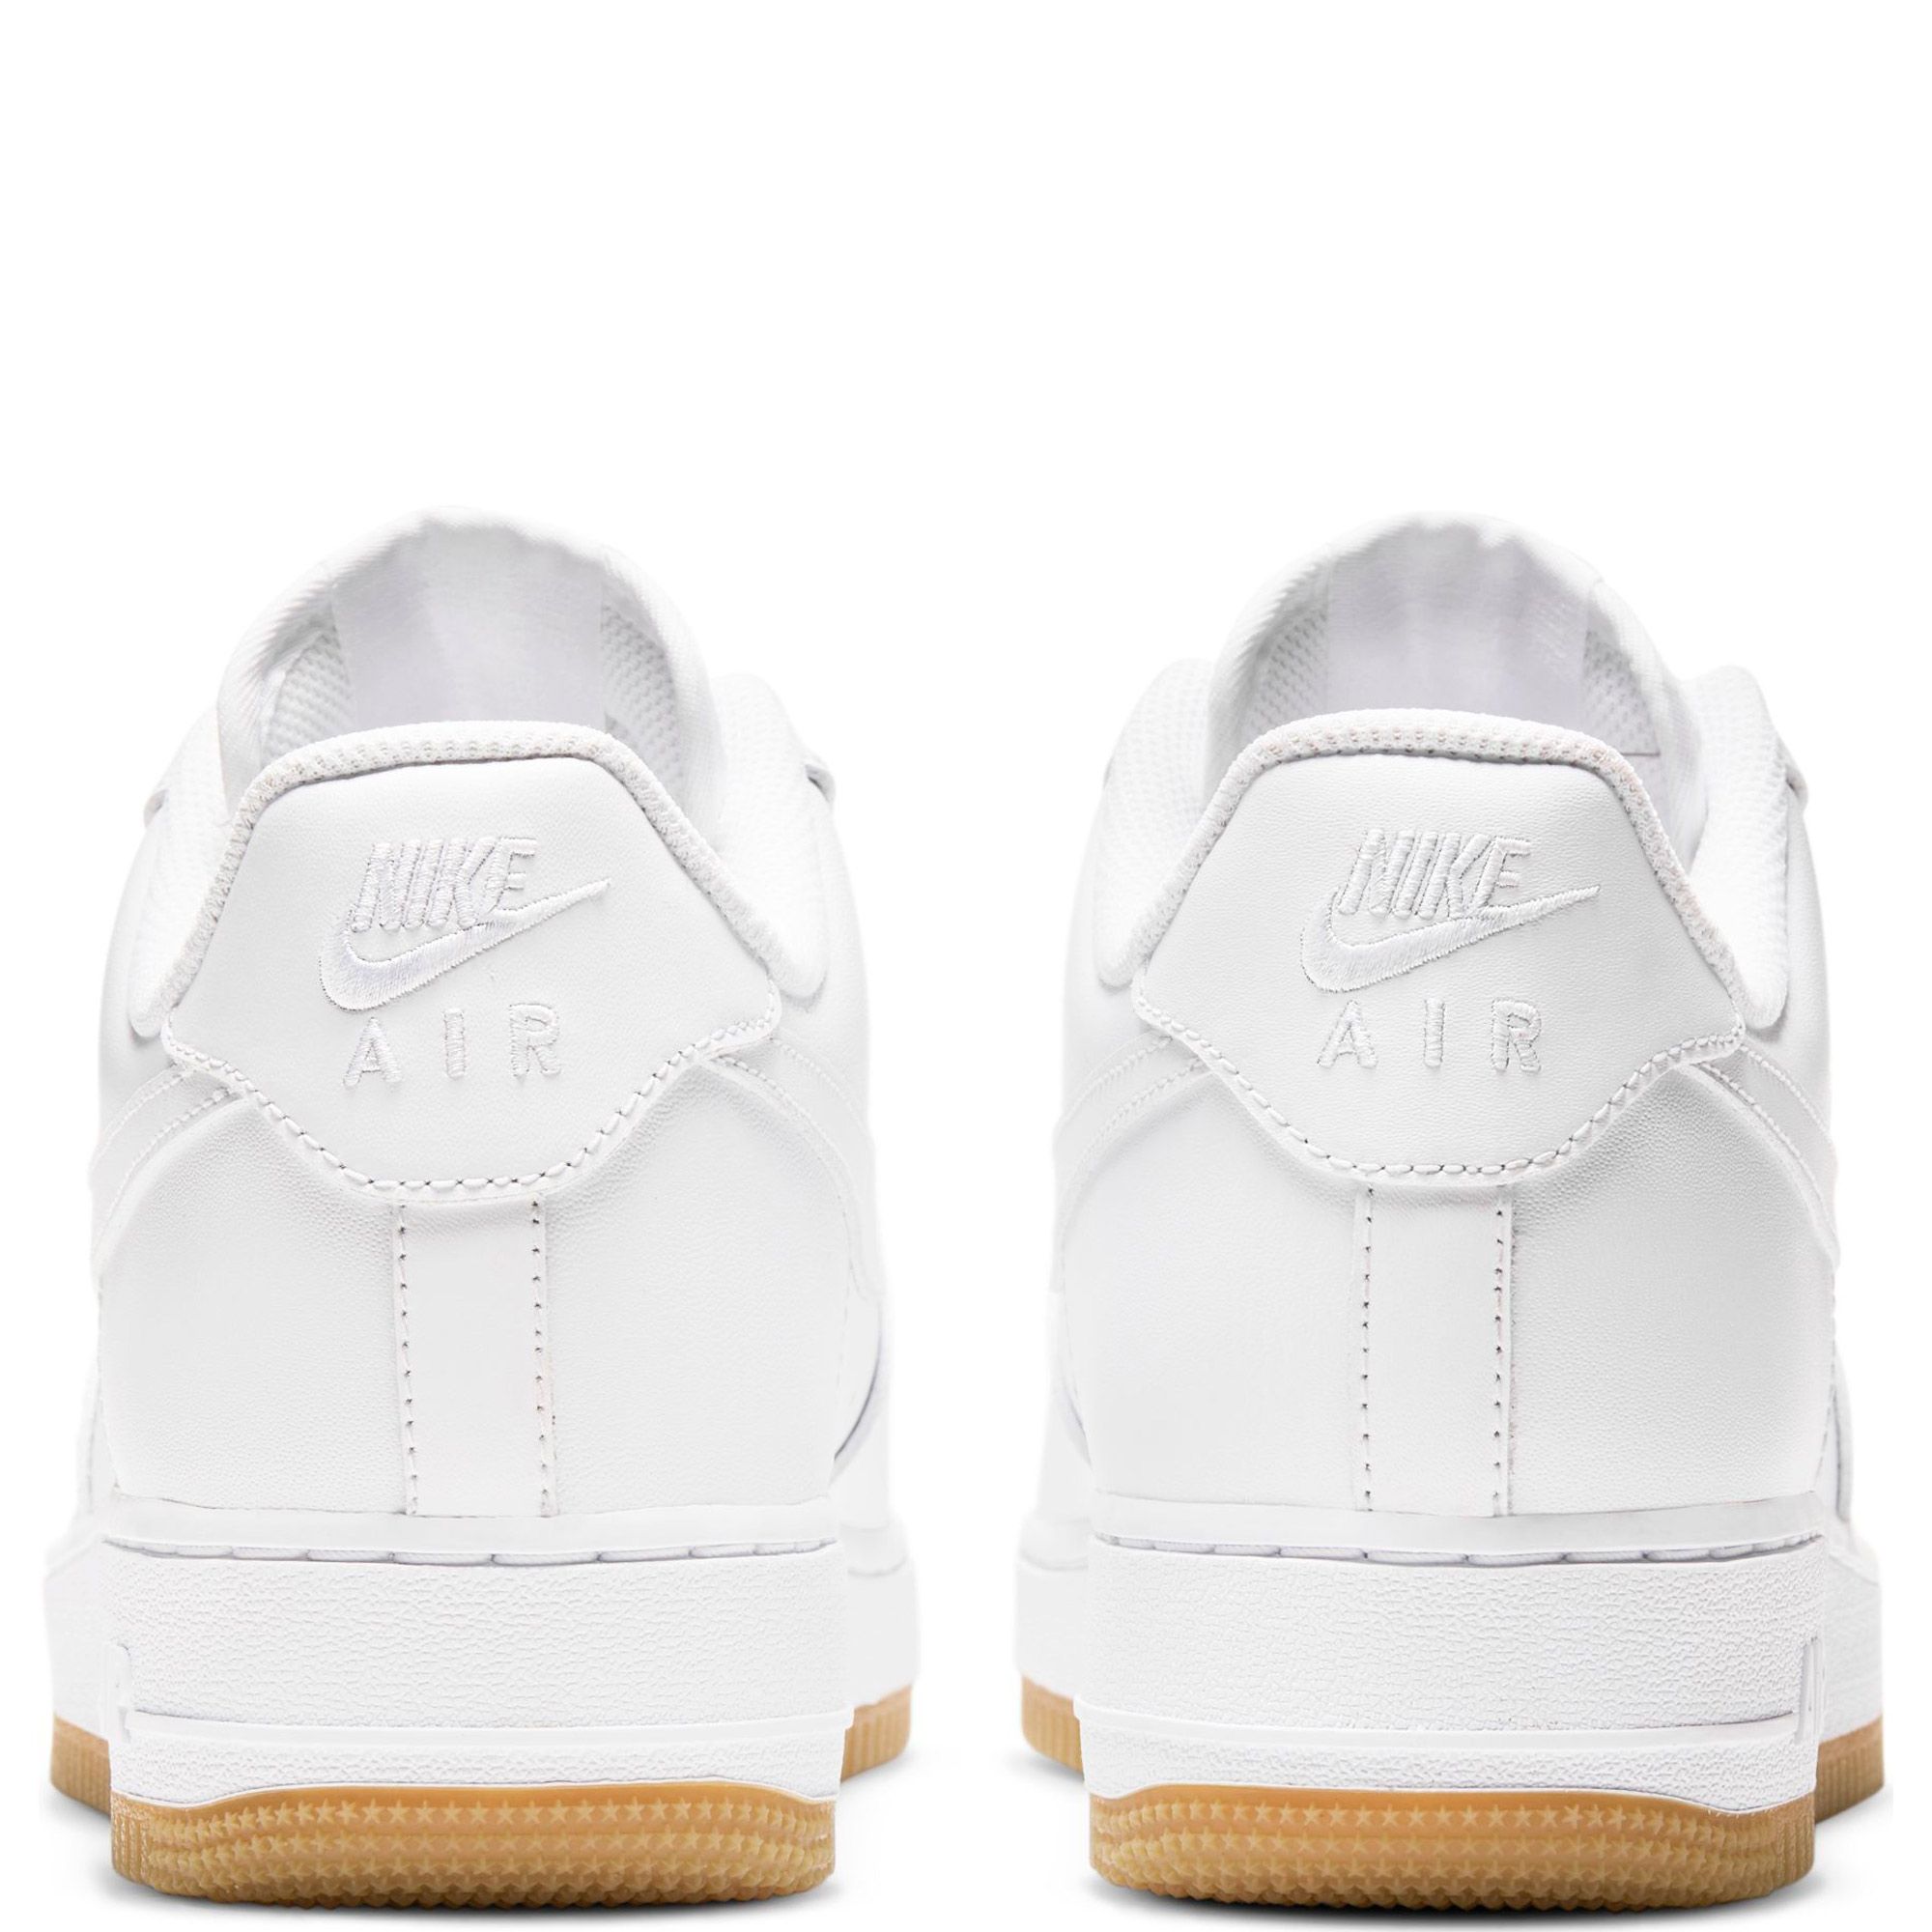 Nike Air Force 1 High '07 07 White Gum for Sale